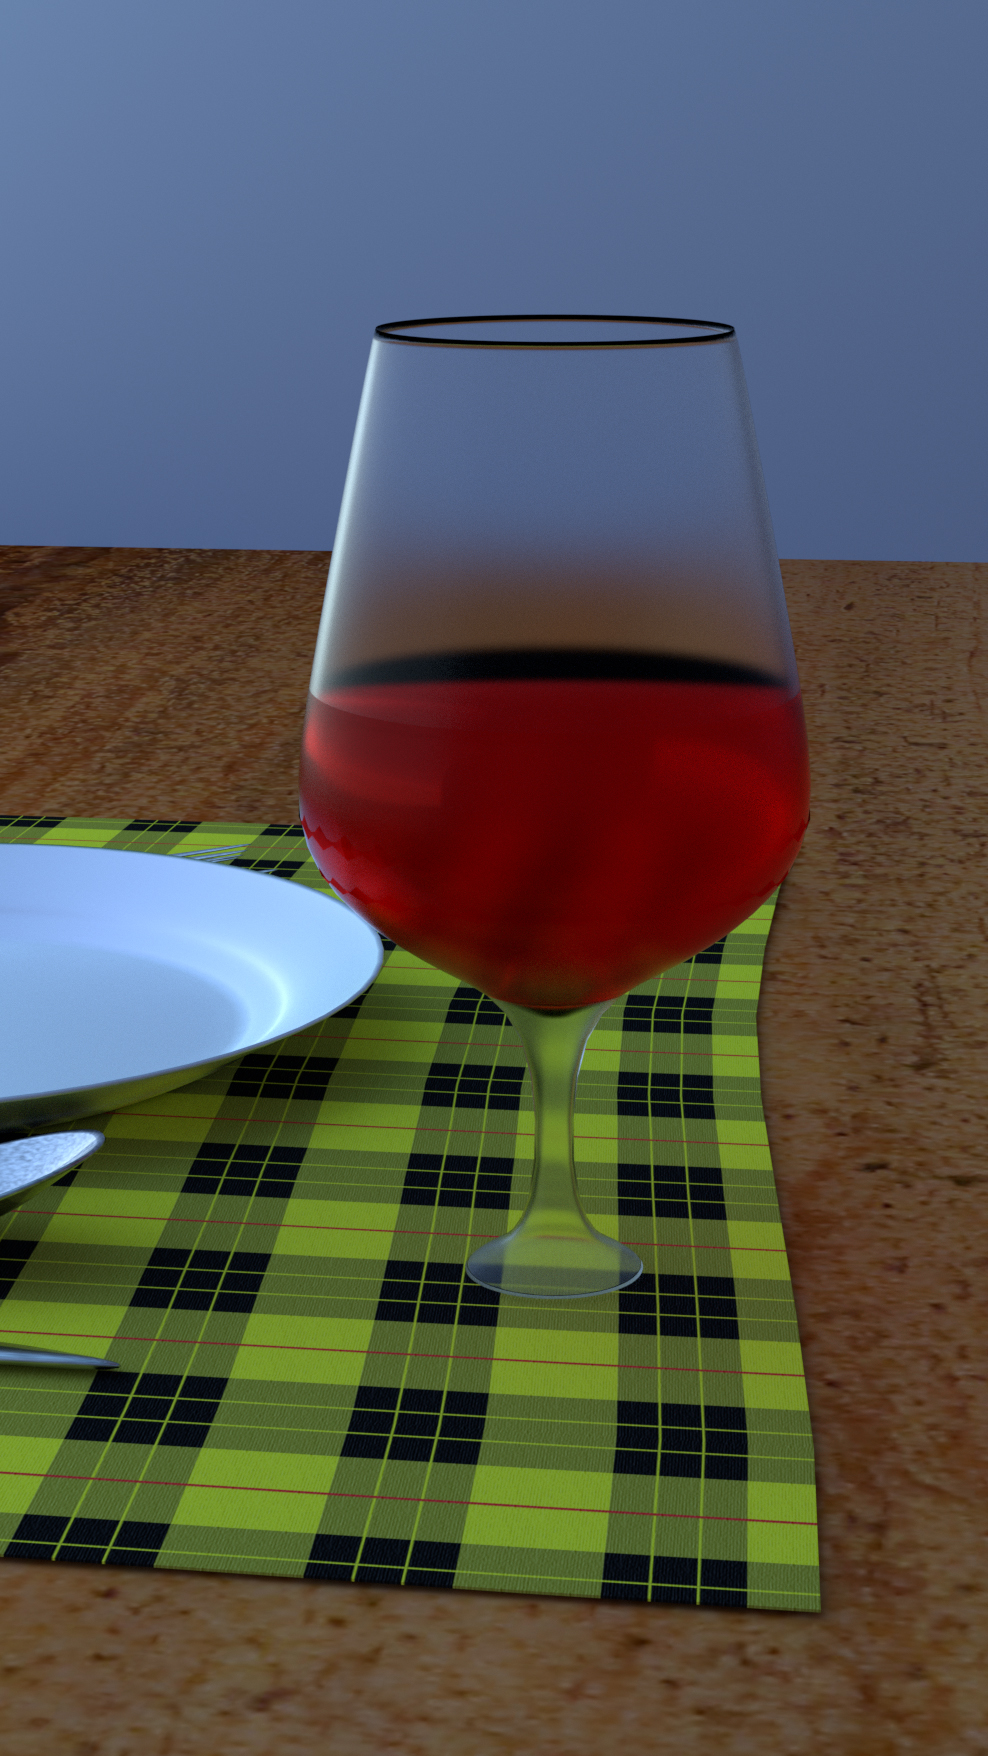 Focus on wine glass in low lighting